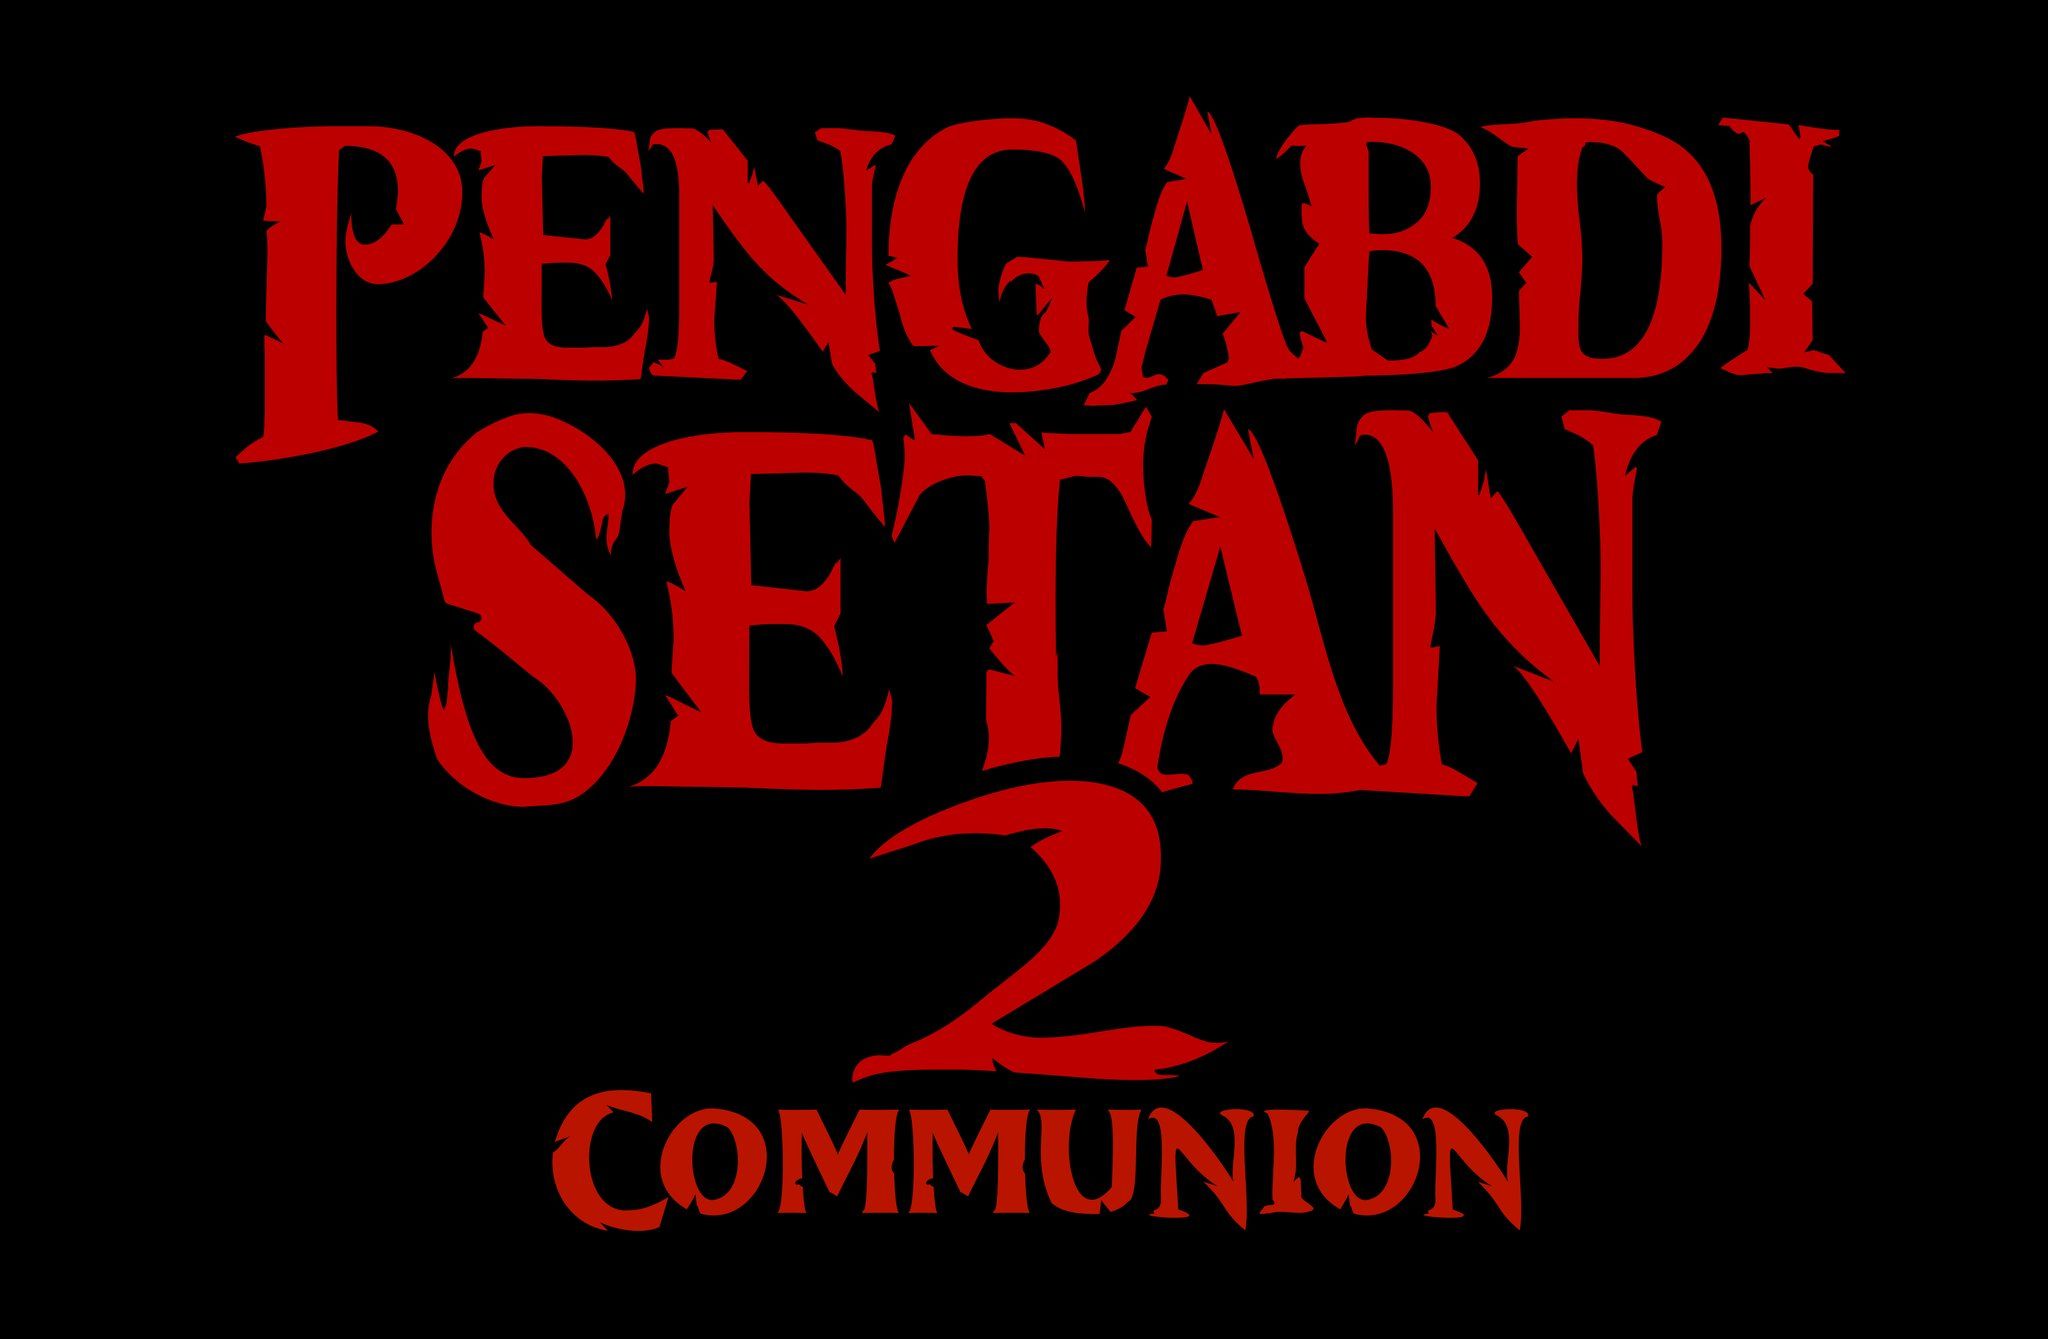 Film Pengabdi Setan 2: The Communion rilis teaser poster pada Kamis, 17 Februari 2022.